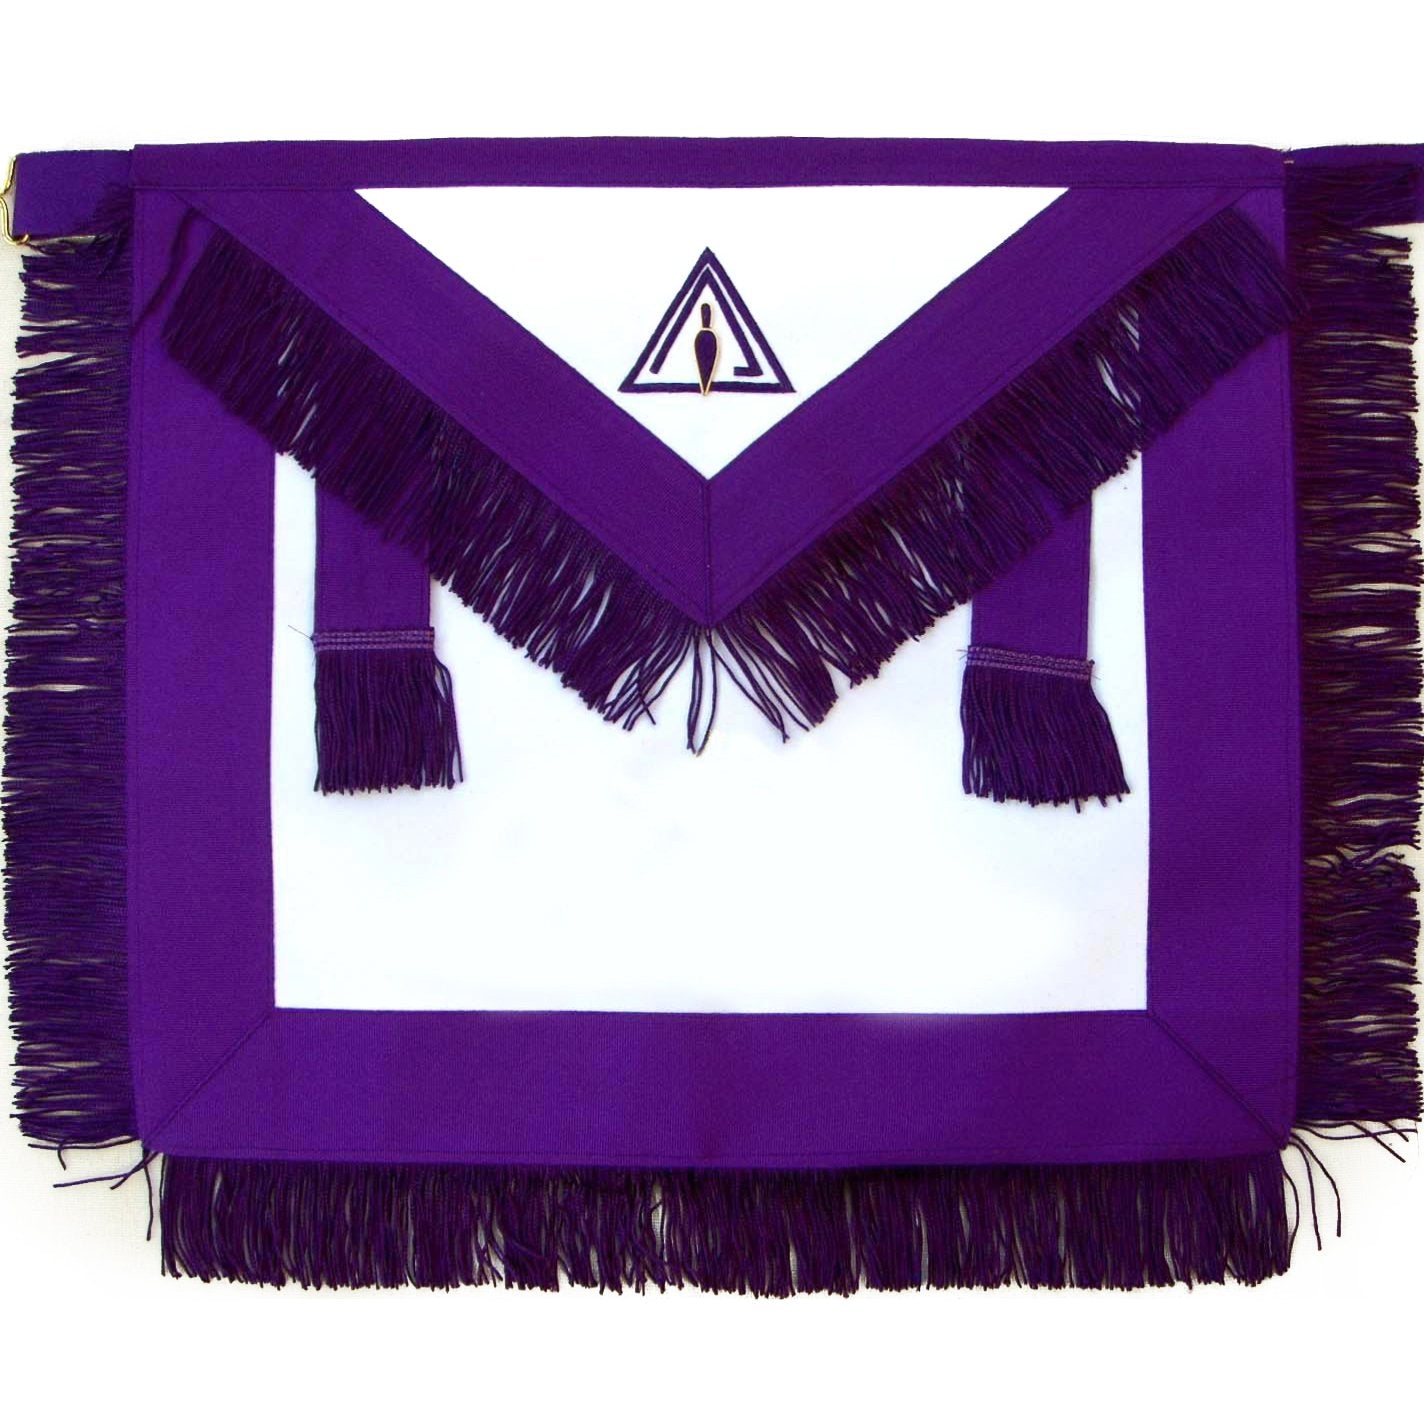 Member Council Apron - White & Purple with Fringe Tassels - Bricks Masons